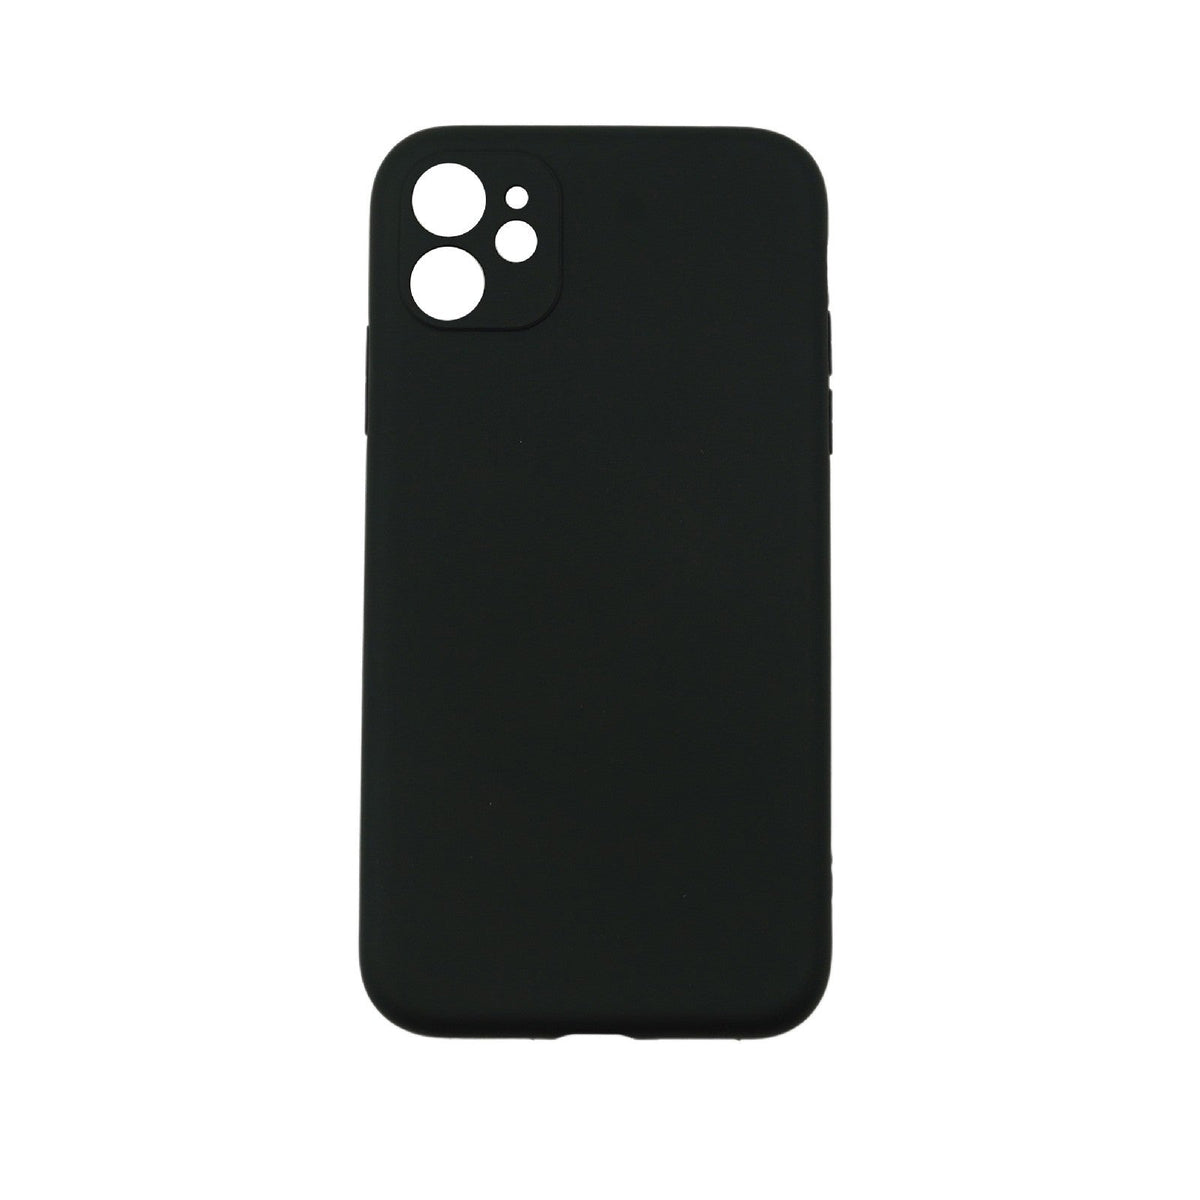 Husa protectie compatibila cu Apple iPhone 12 Liquid Silicone Case Negru